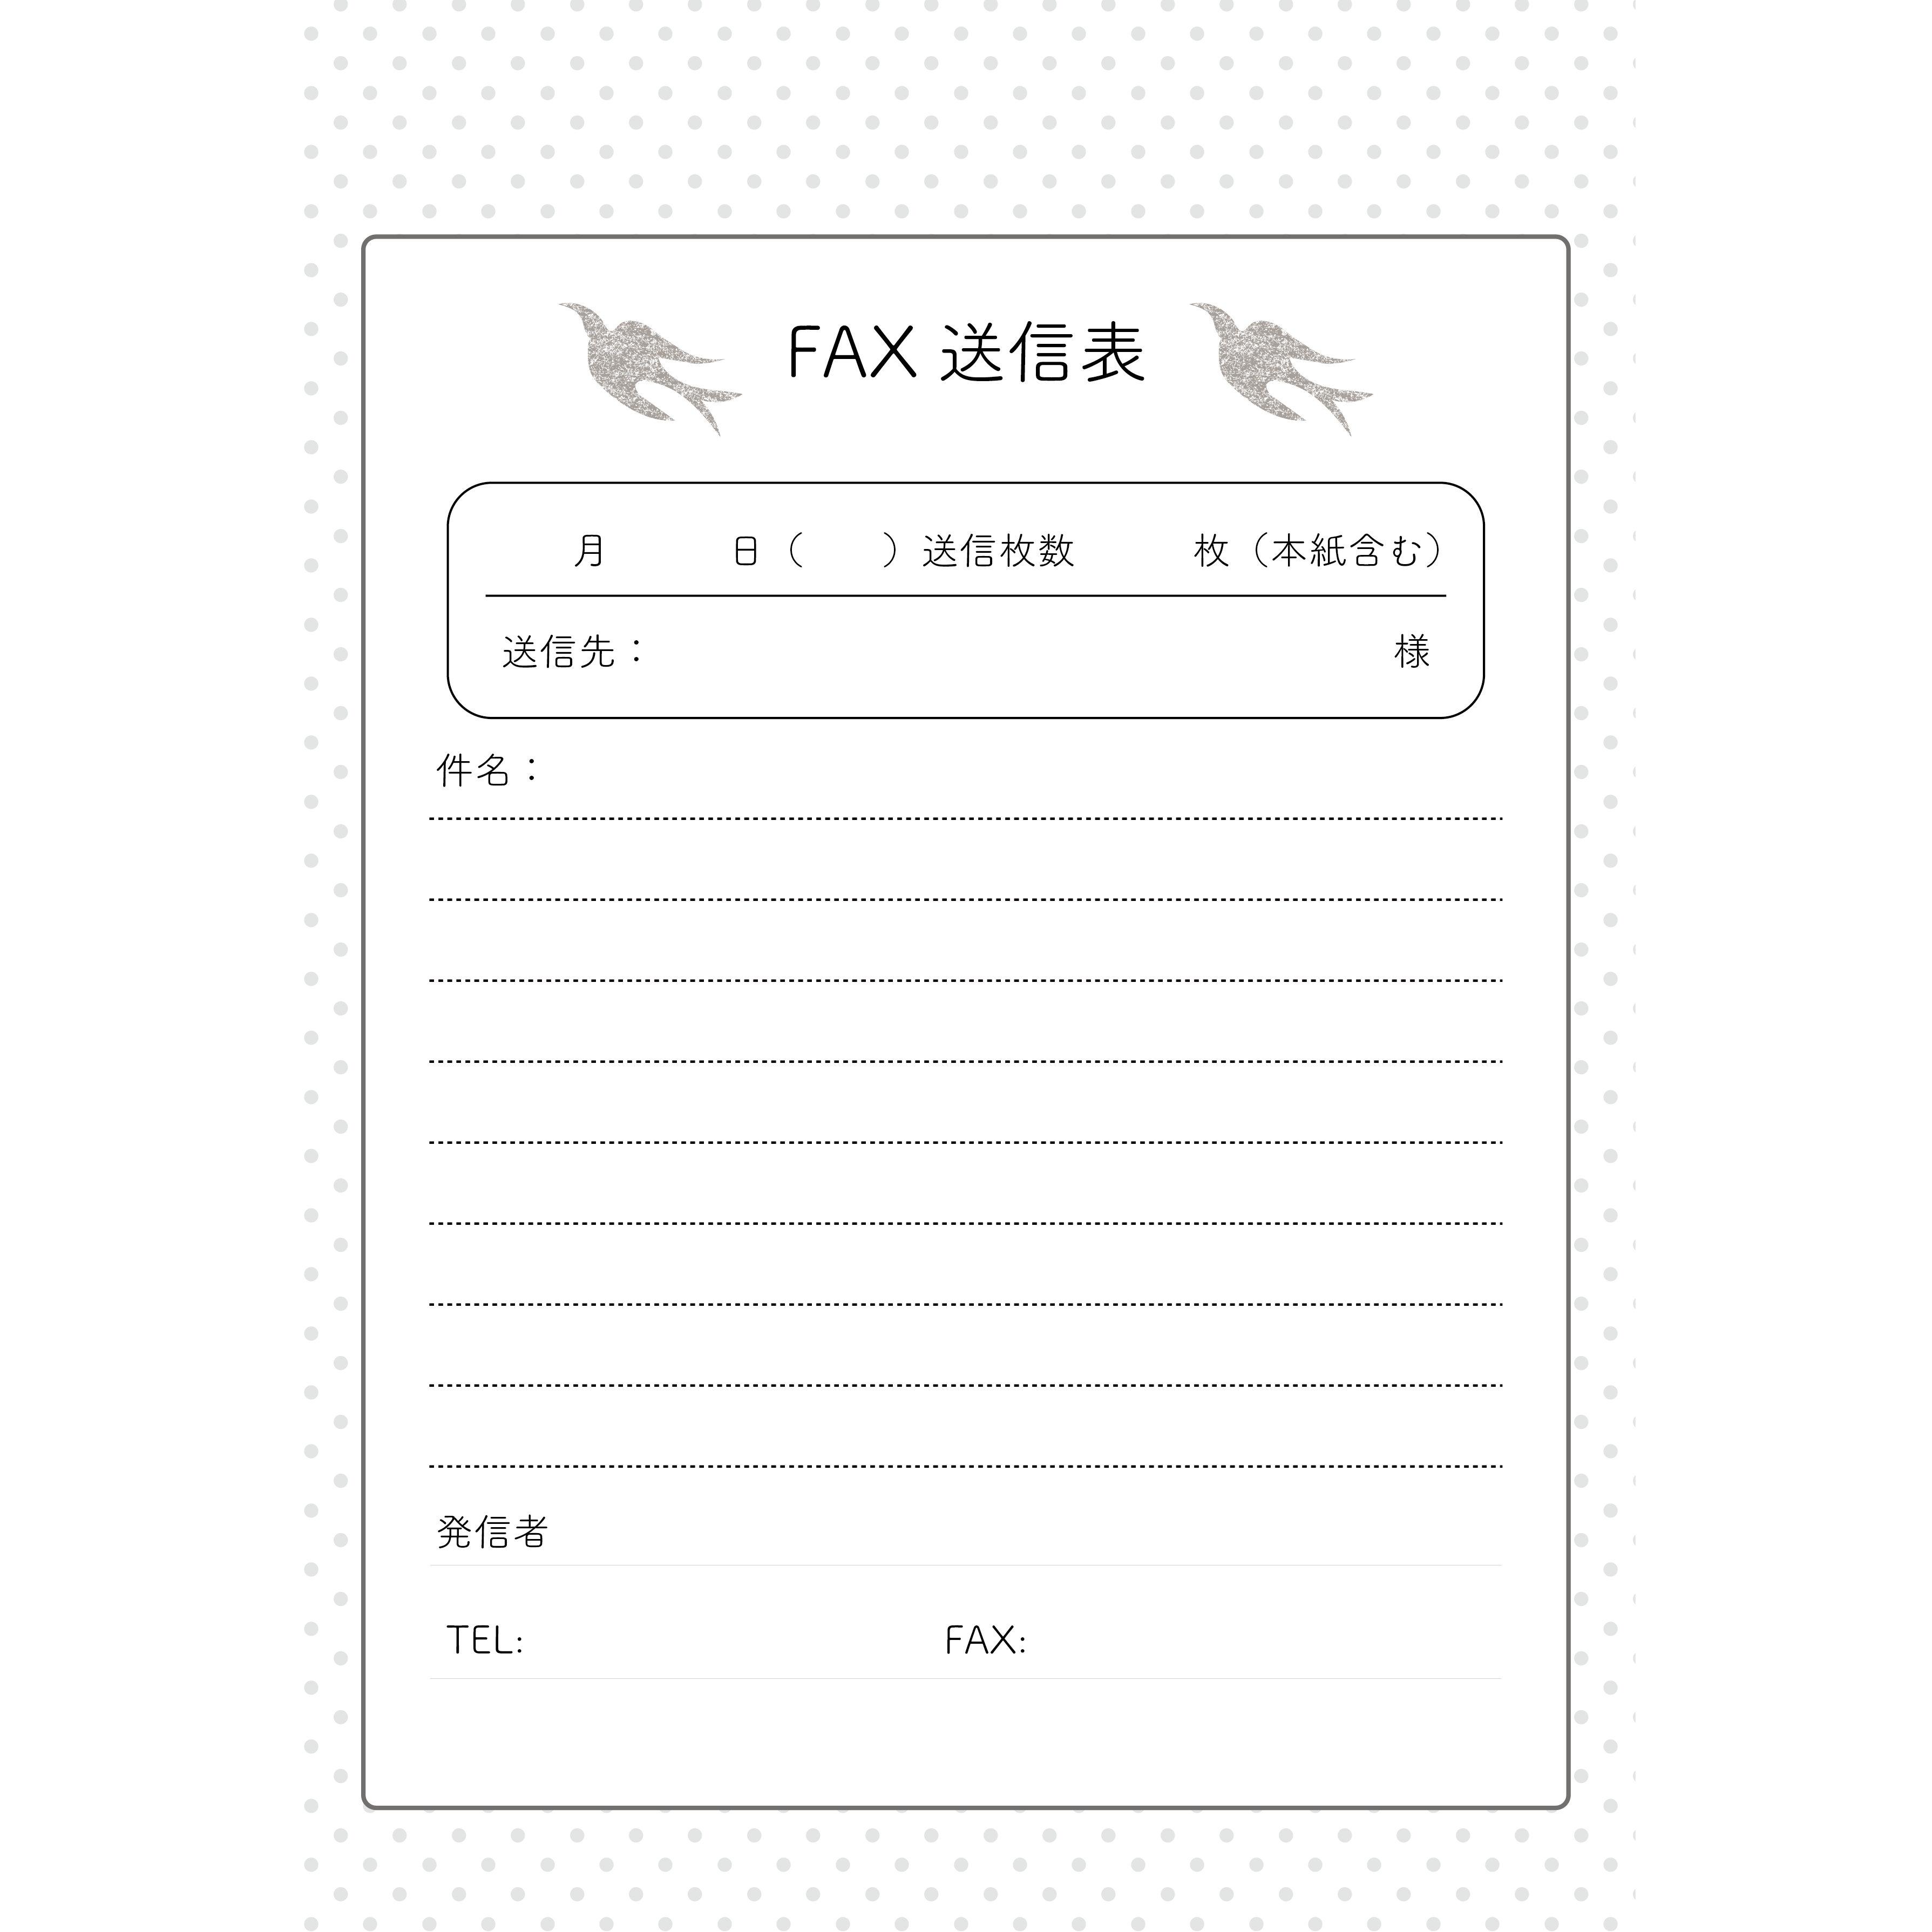 Fax ファックス 送信用紙 フォーマット テンプレート イラスト 商用フリー 無料 のイラスト素材なら イラストマンション